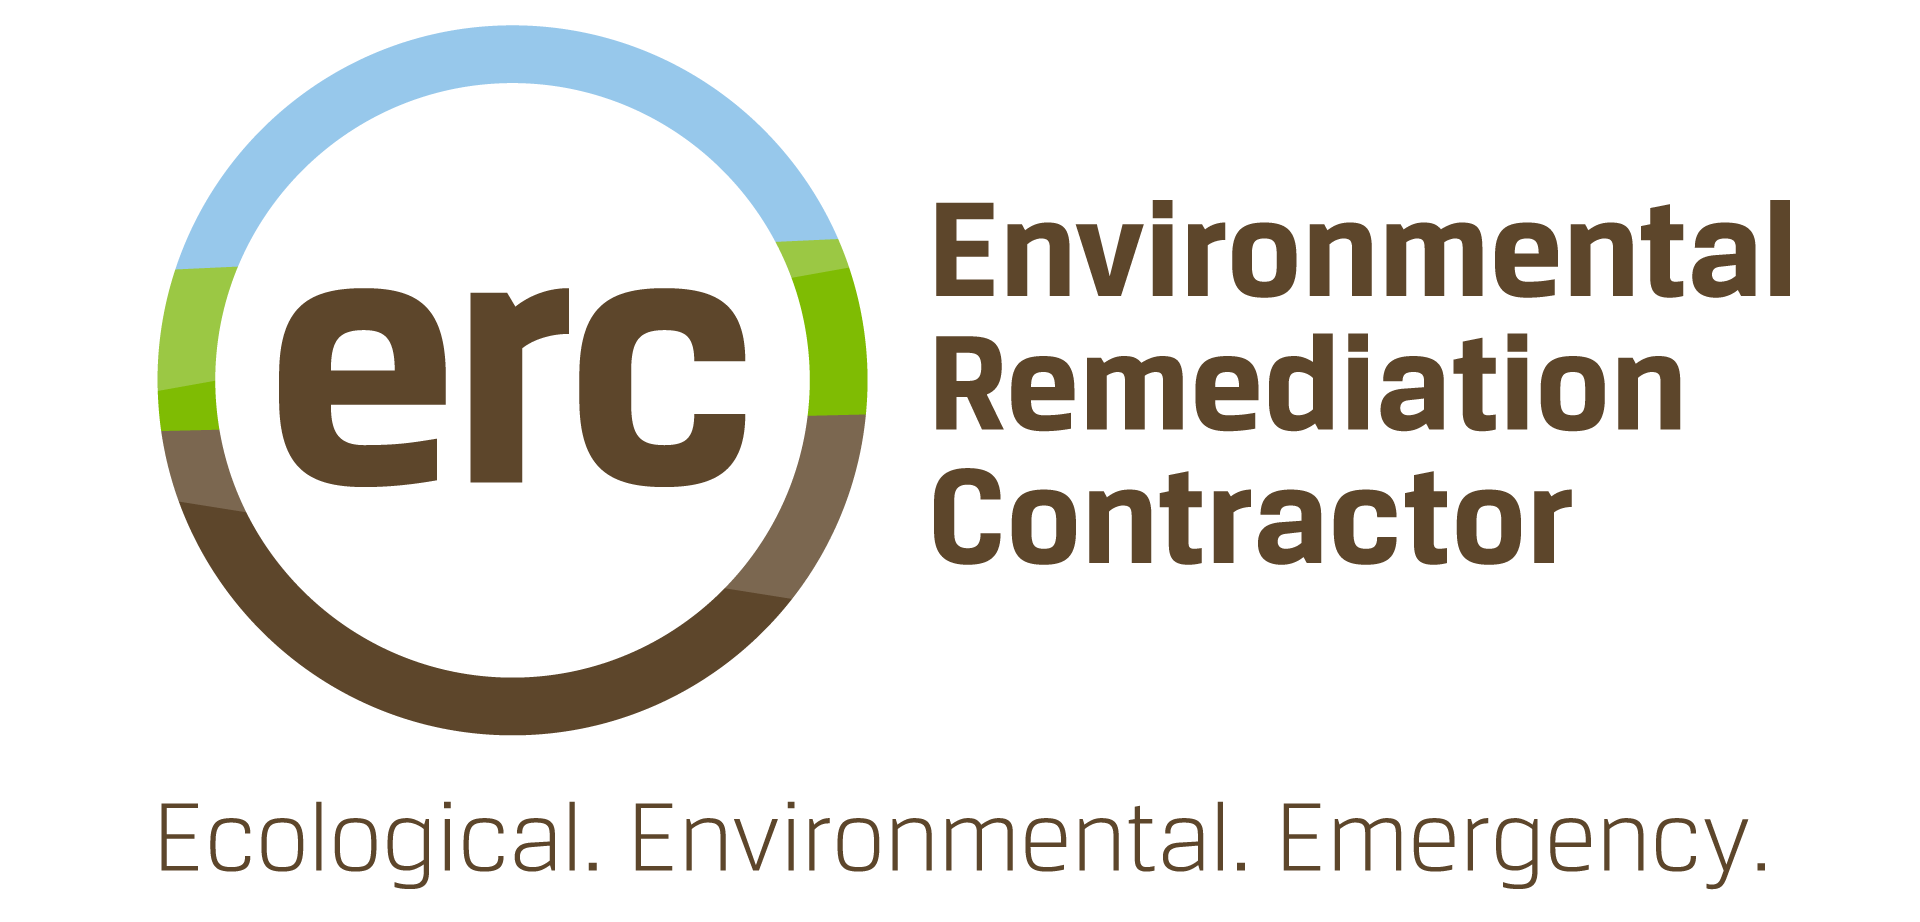 erc-2020-logo-high - Environmental Remediation Contractor (002).png